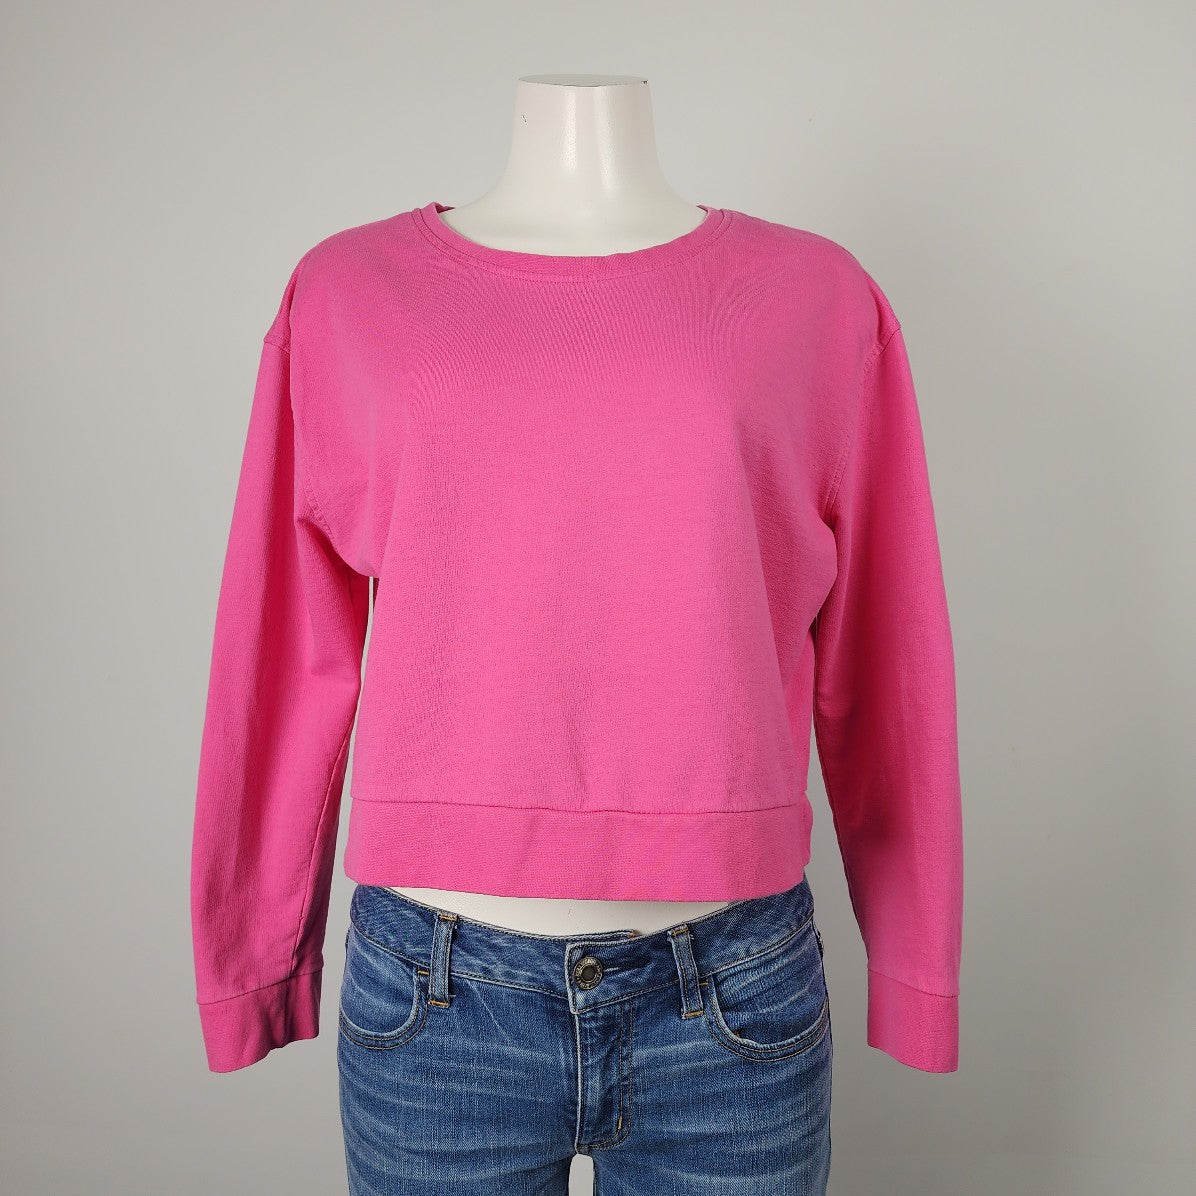 Kangol Pink Cotton Cropped Sweatshirt Size L